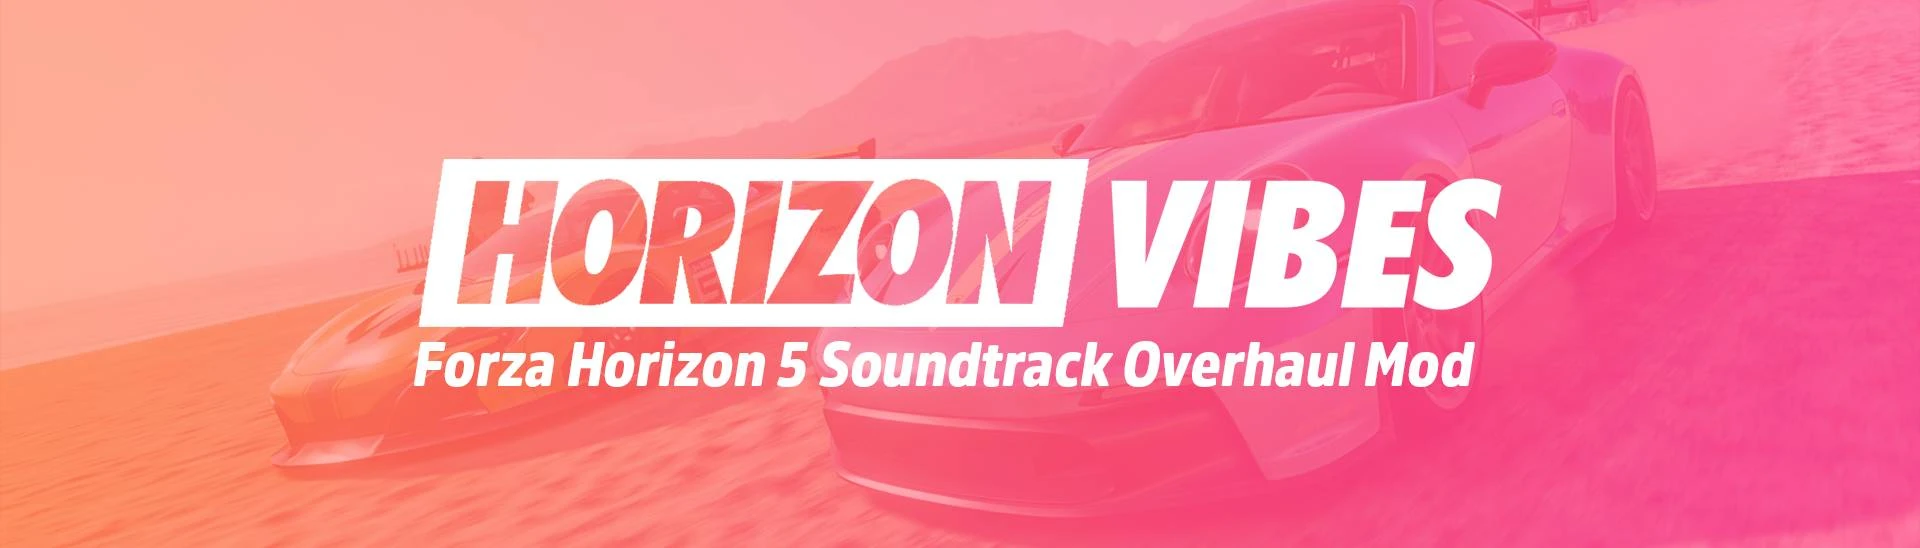 Forza Horizon 1 and 2 Online Servers Shutting Down - News